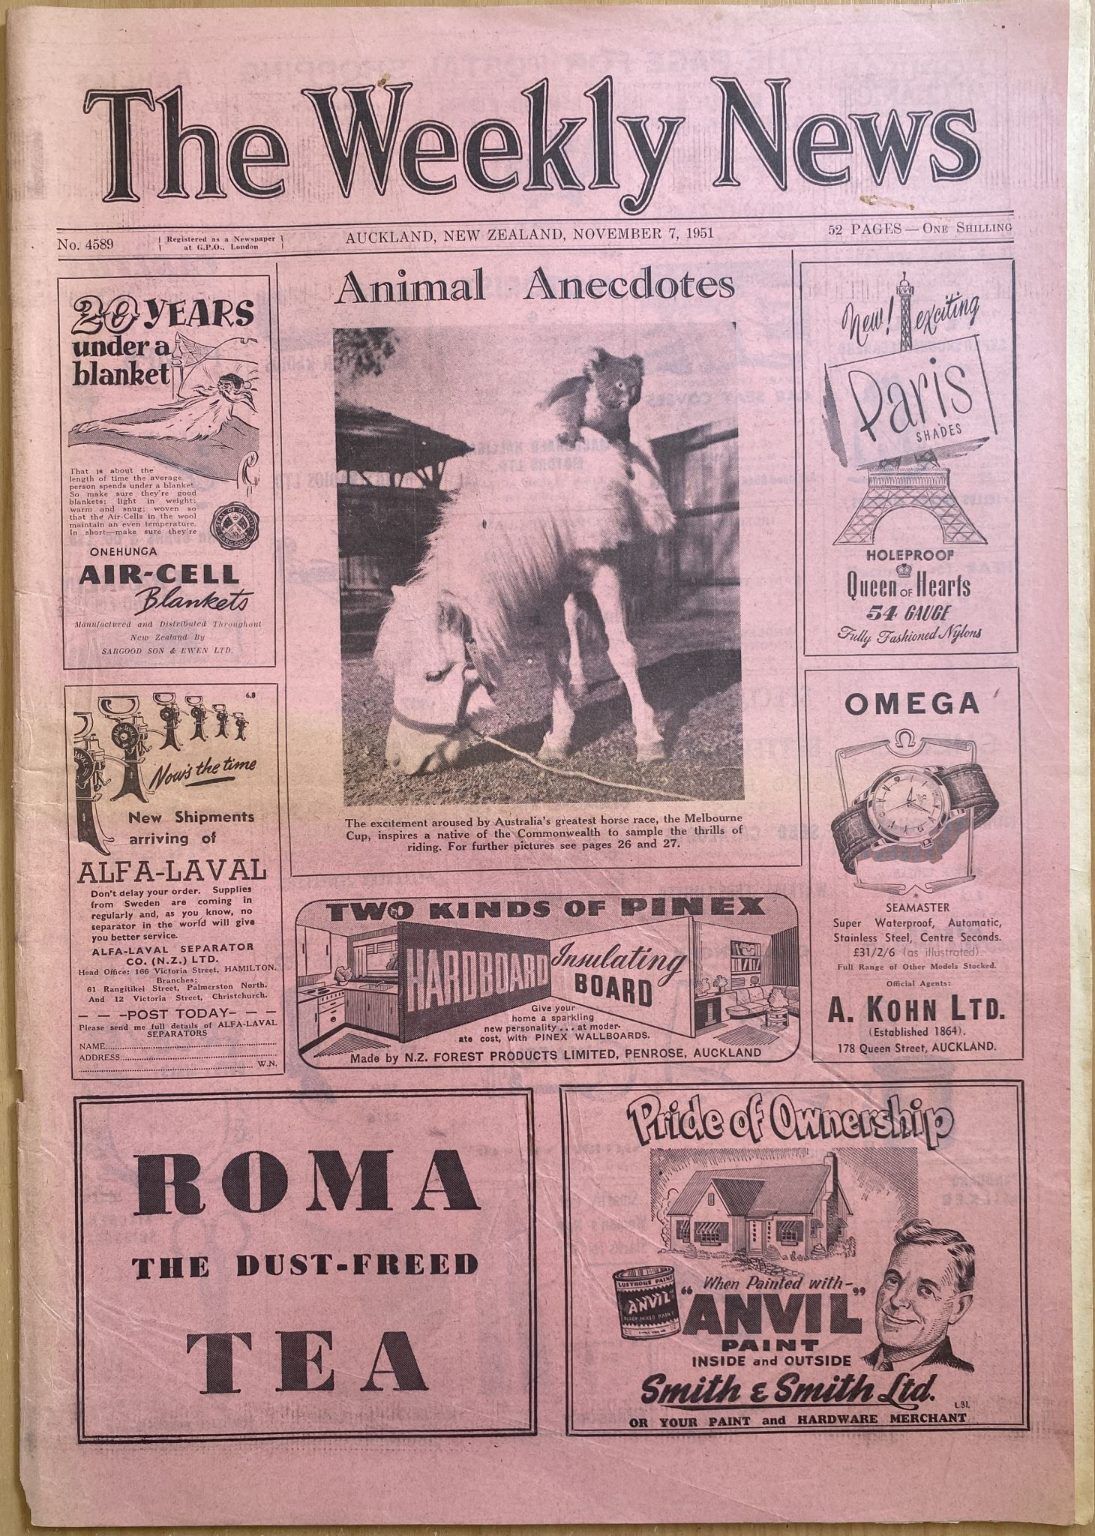 OLD NEWSPAPER: The Weekly News, No. 4589, 7 November 1951